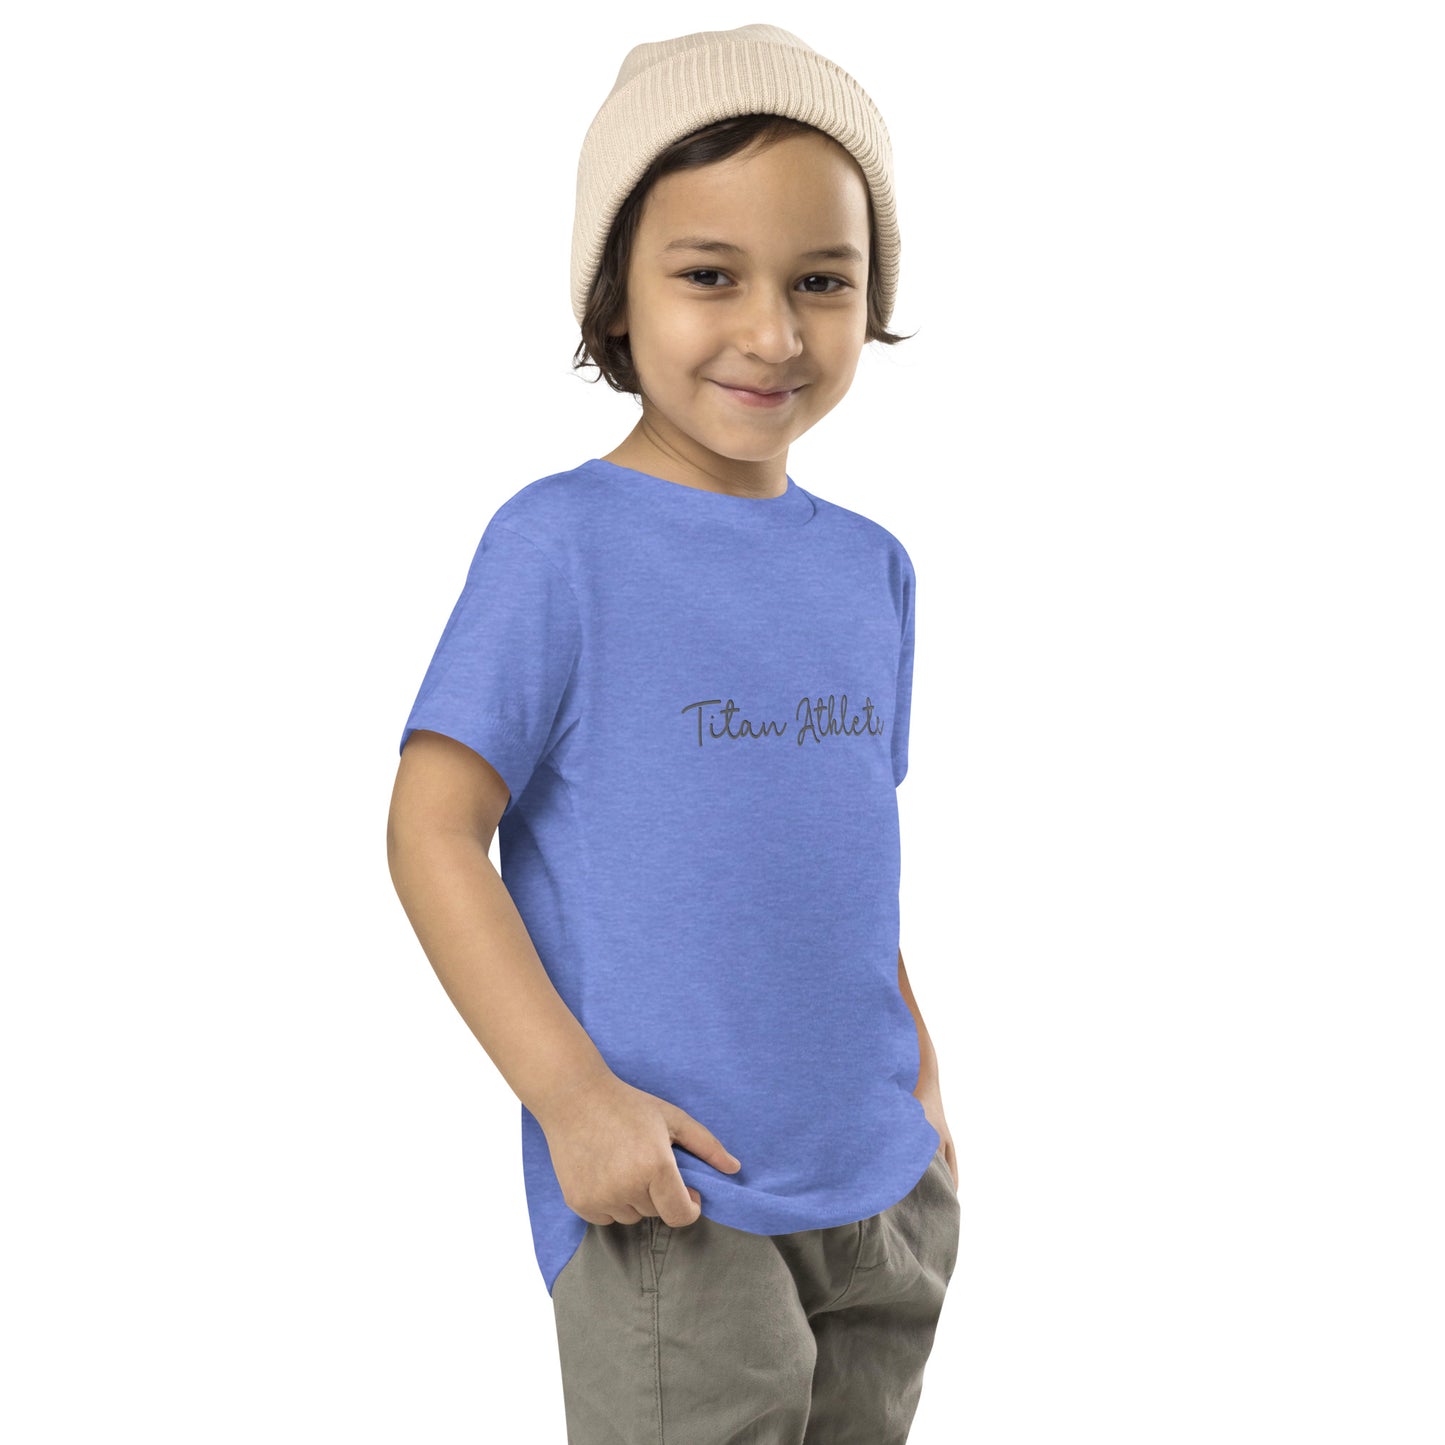 Titan Toddler Short Sleeve Tee